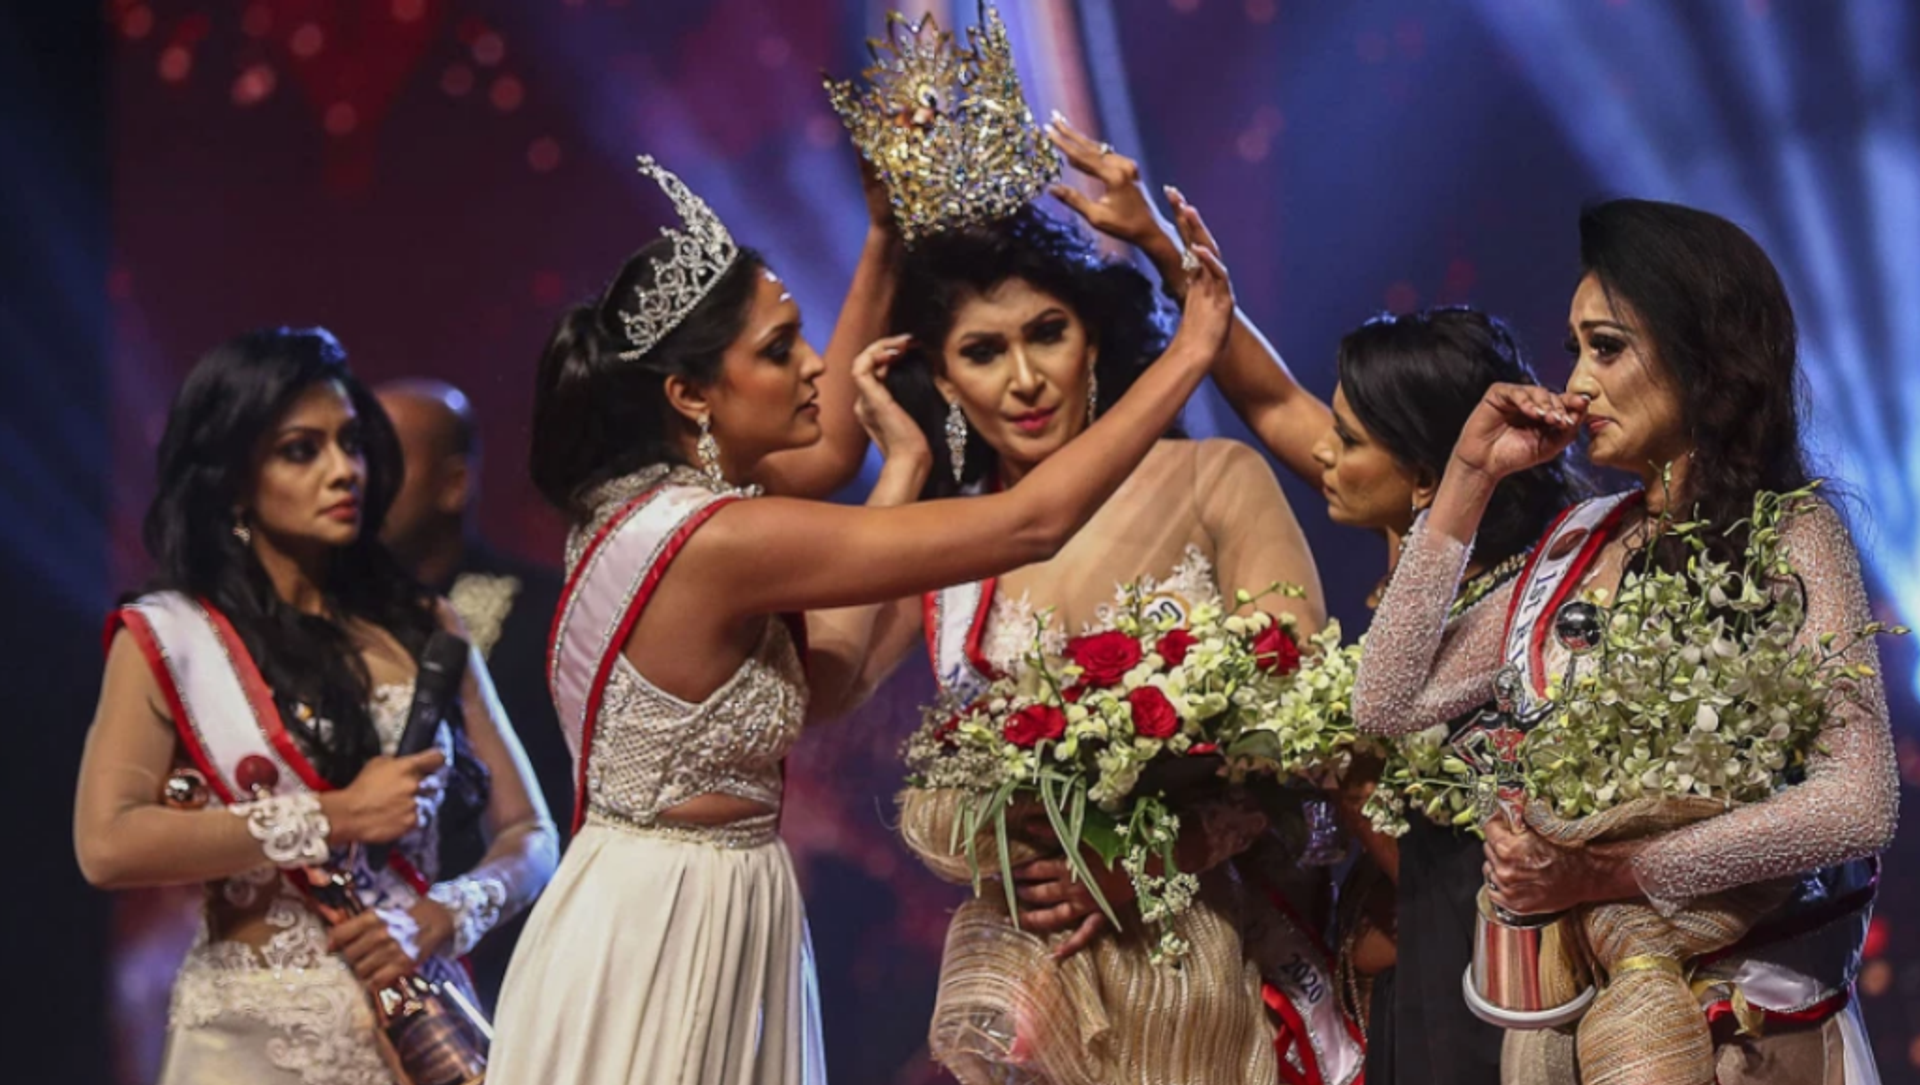 Mrs. Sri Lanka 2020 Caroline Jurie removes the crown of 2021 winner Pushpika De Silva (center) as she is disqualified. - 俄羅斯衛星通訊社, 1920, 06.04.2021